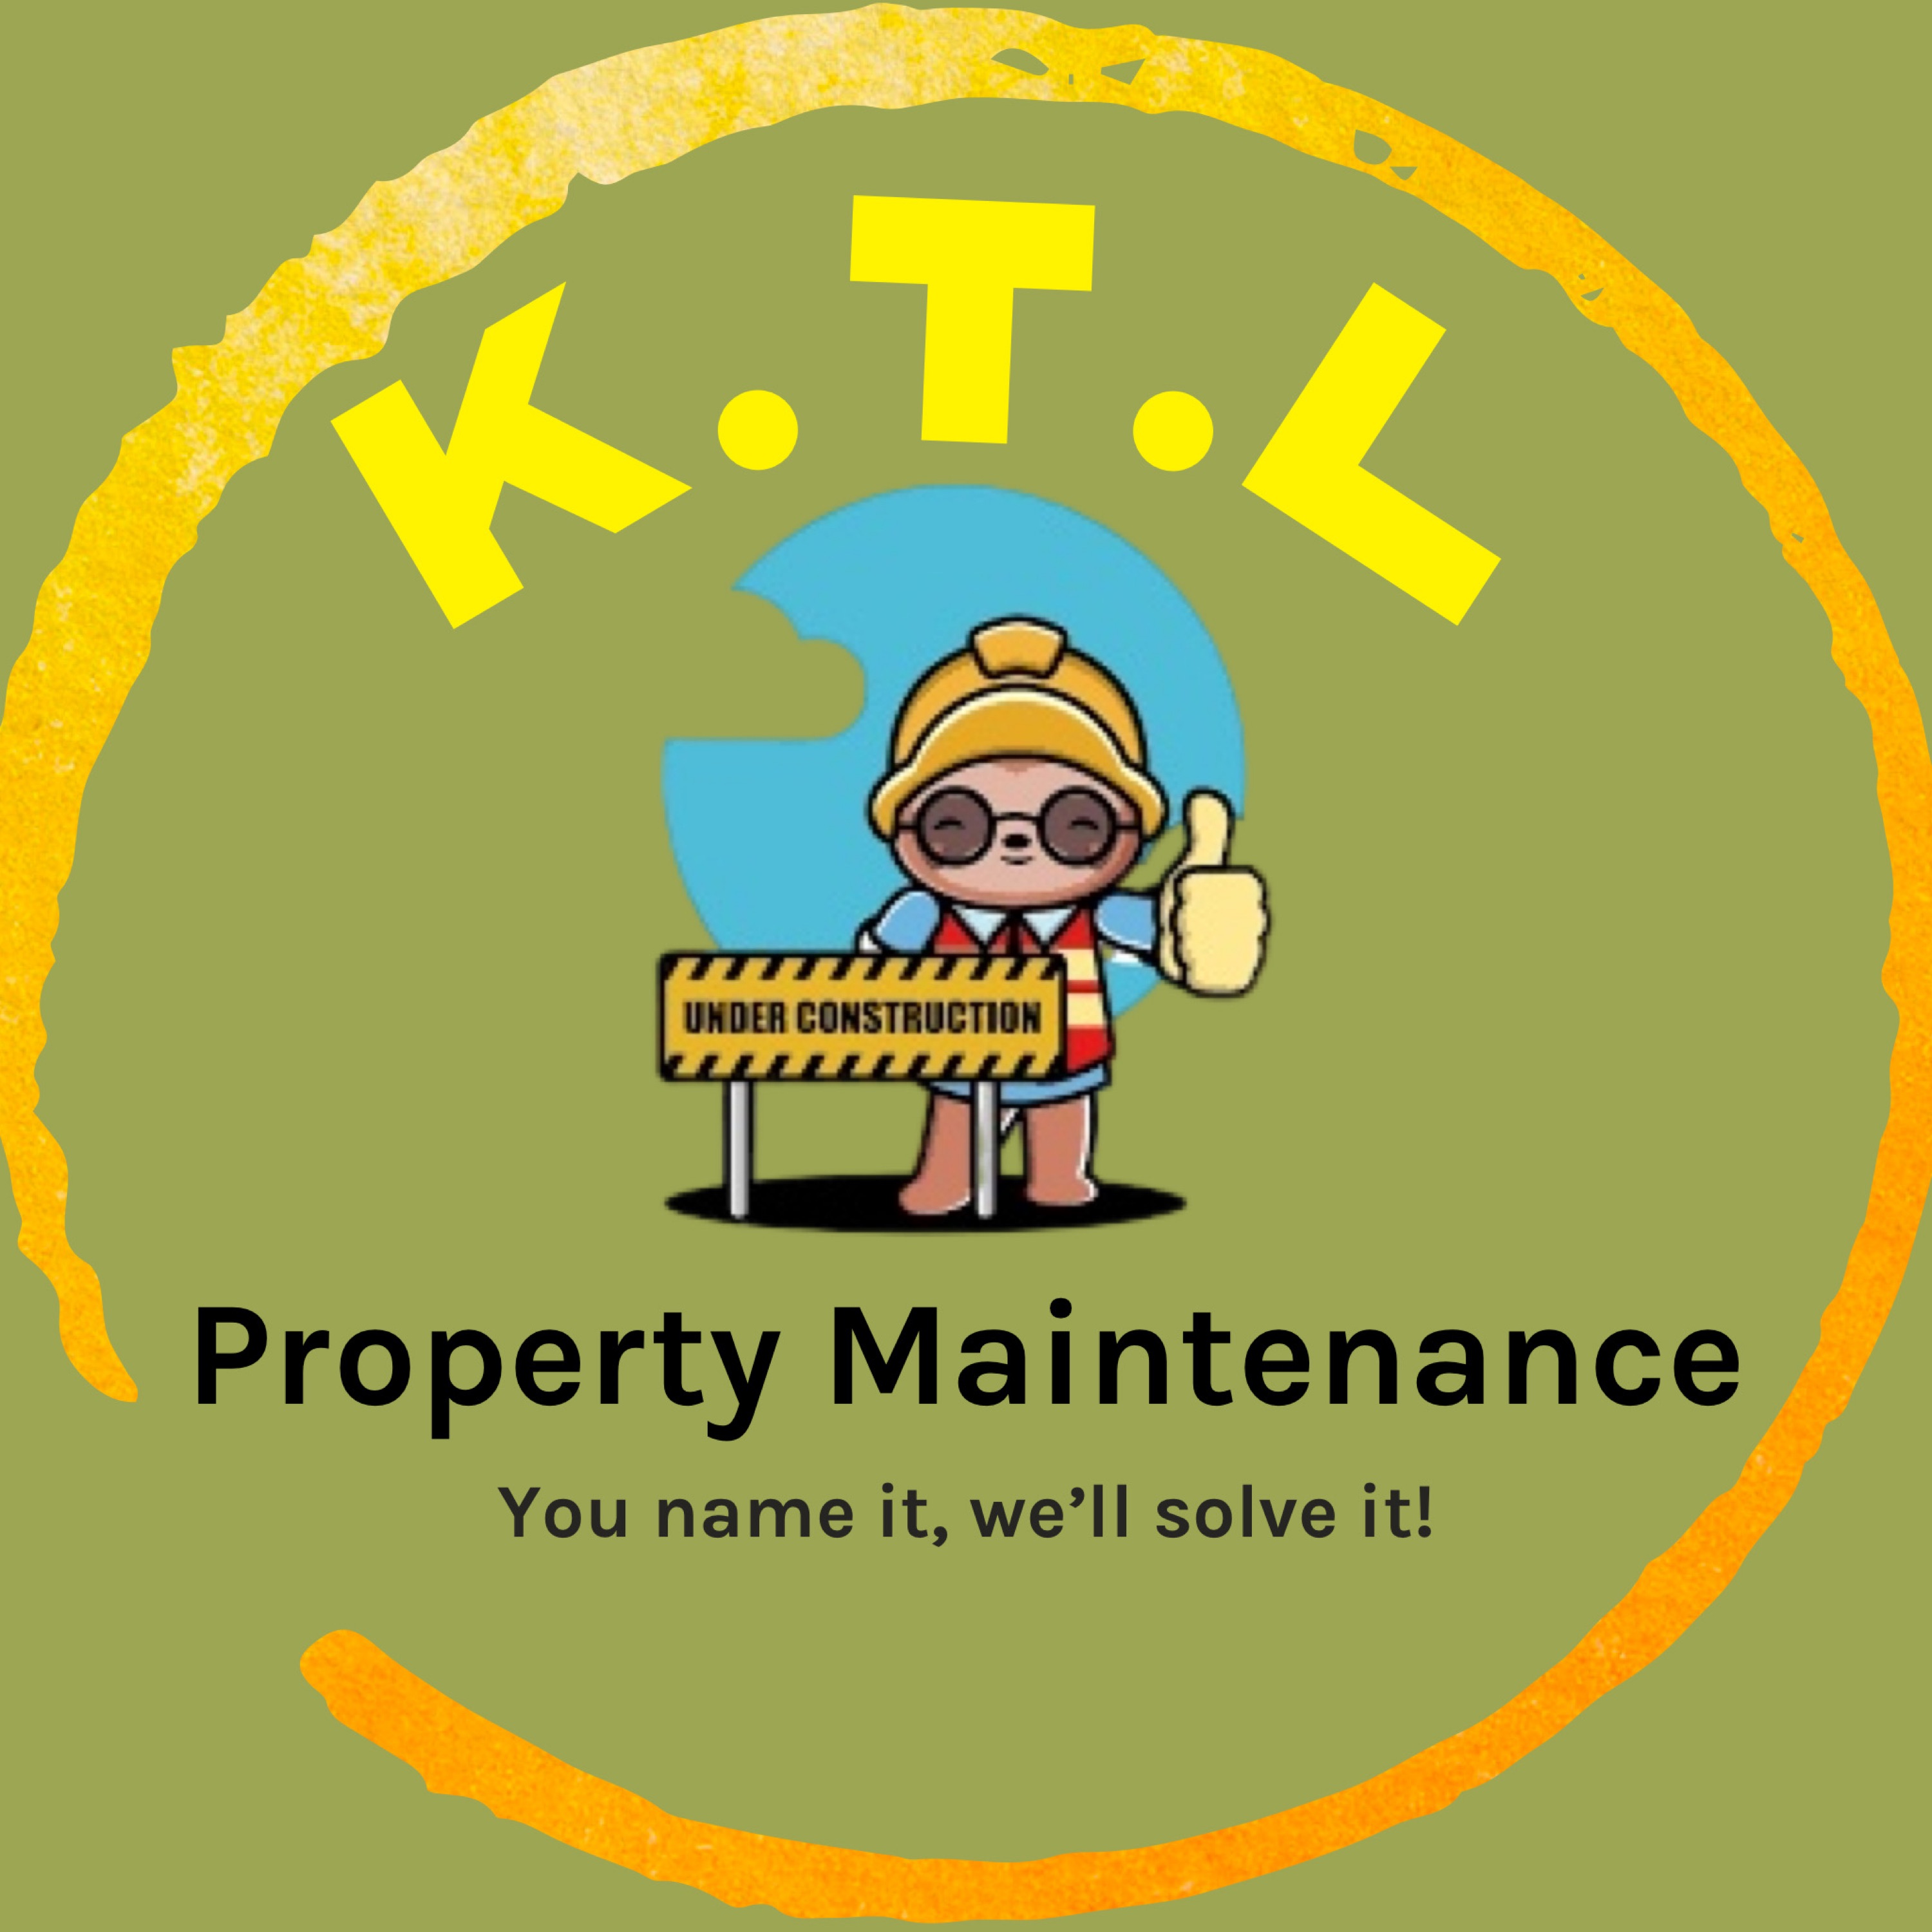 KTL Property Maintenance - Unlicensed Contractor Logo